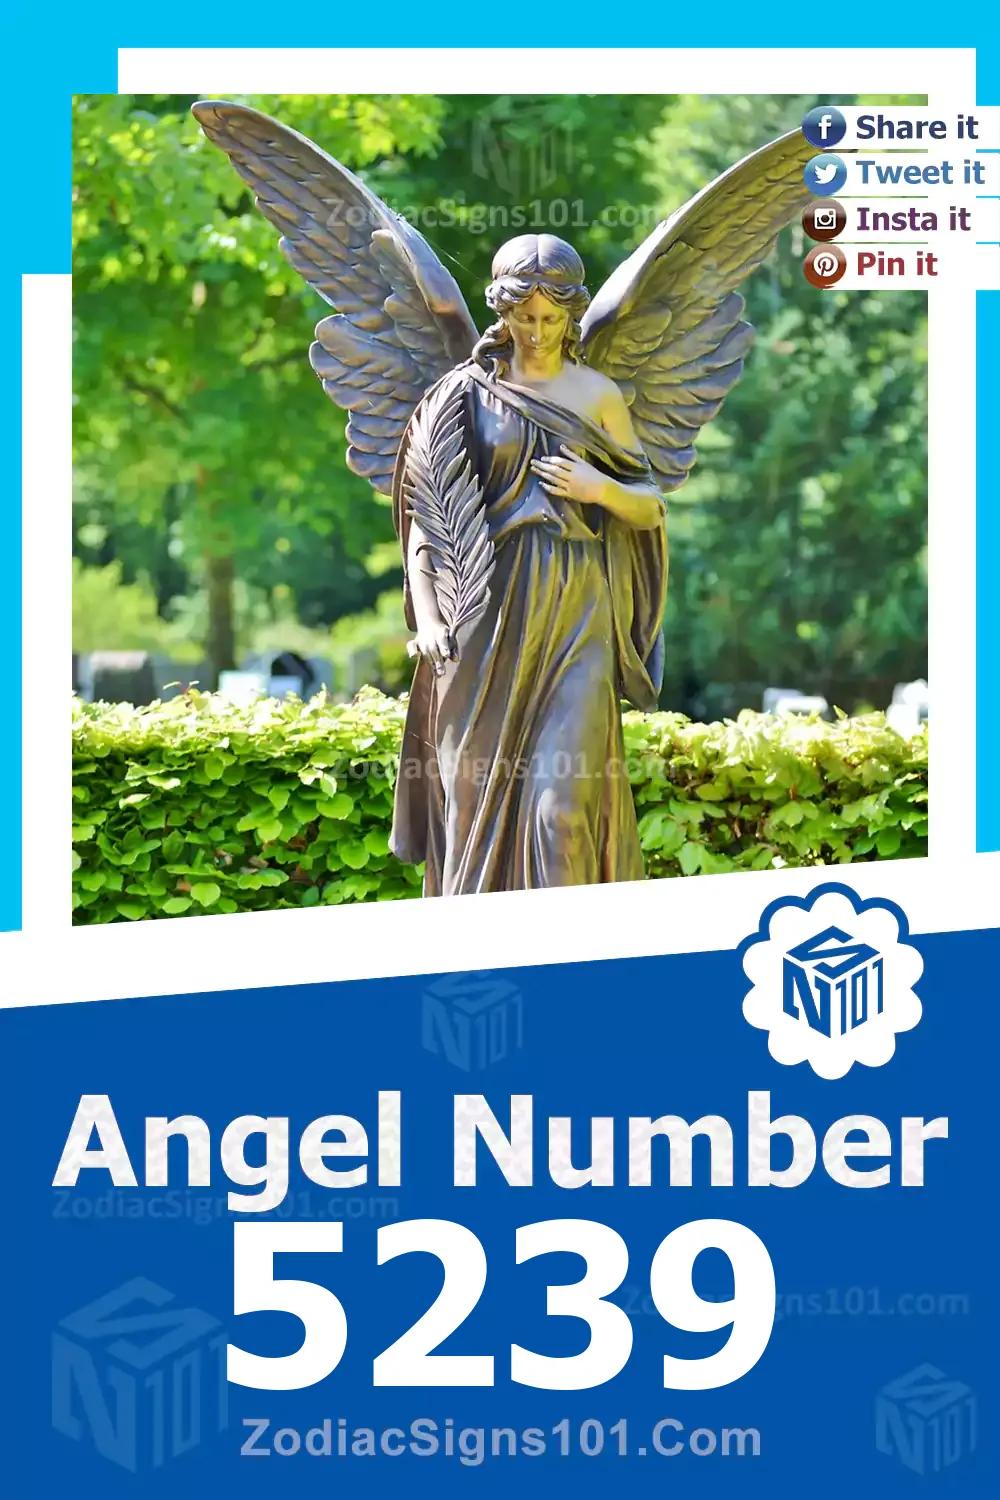 5239-Angel-Number-Meaning.jpg